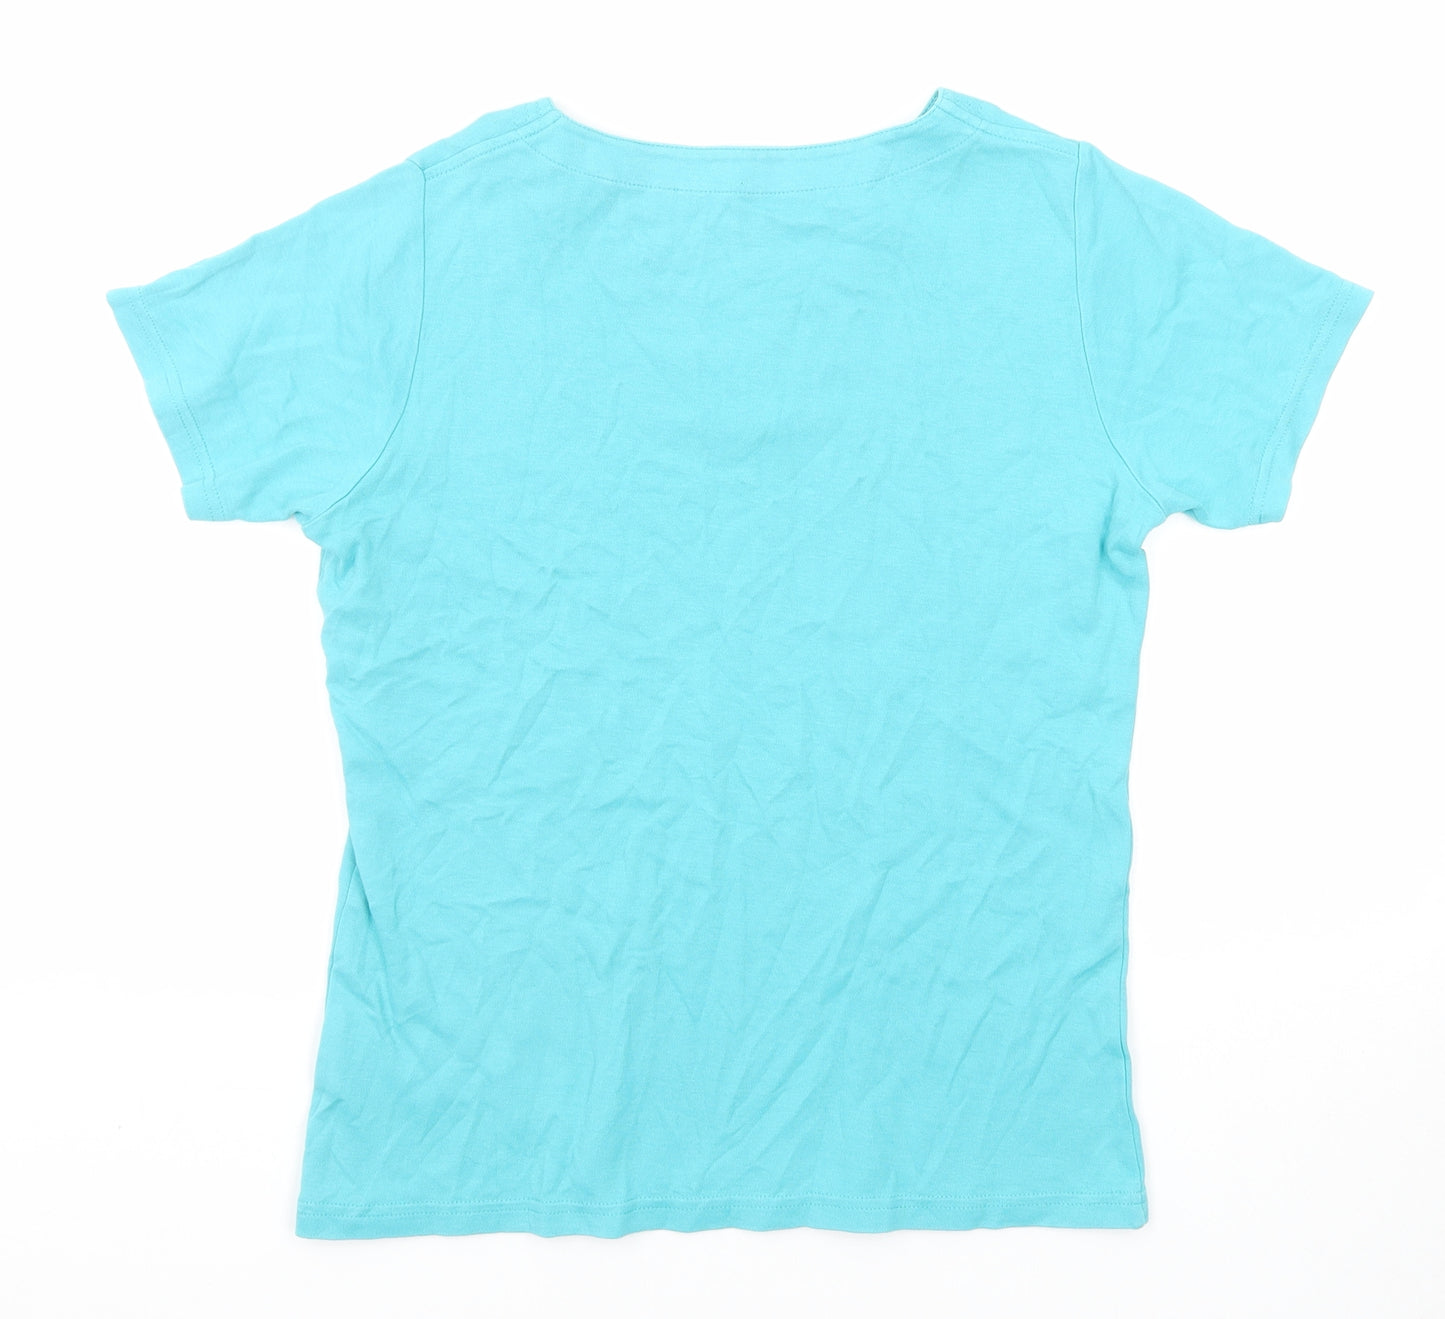 EWM Womens Blue Cotton Basic T-Shirt Size 10 V-Neck